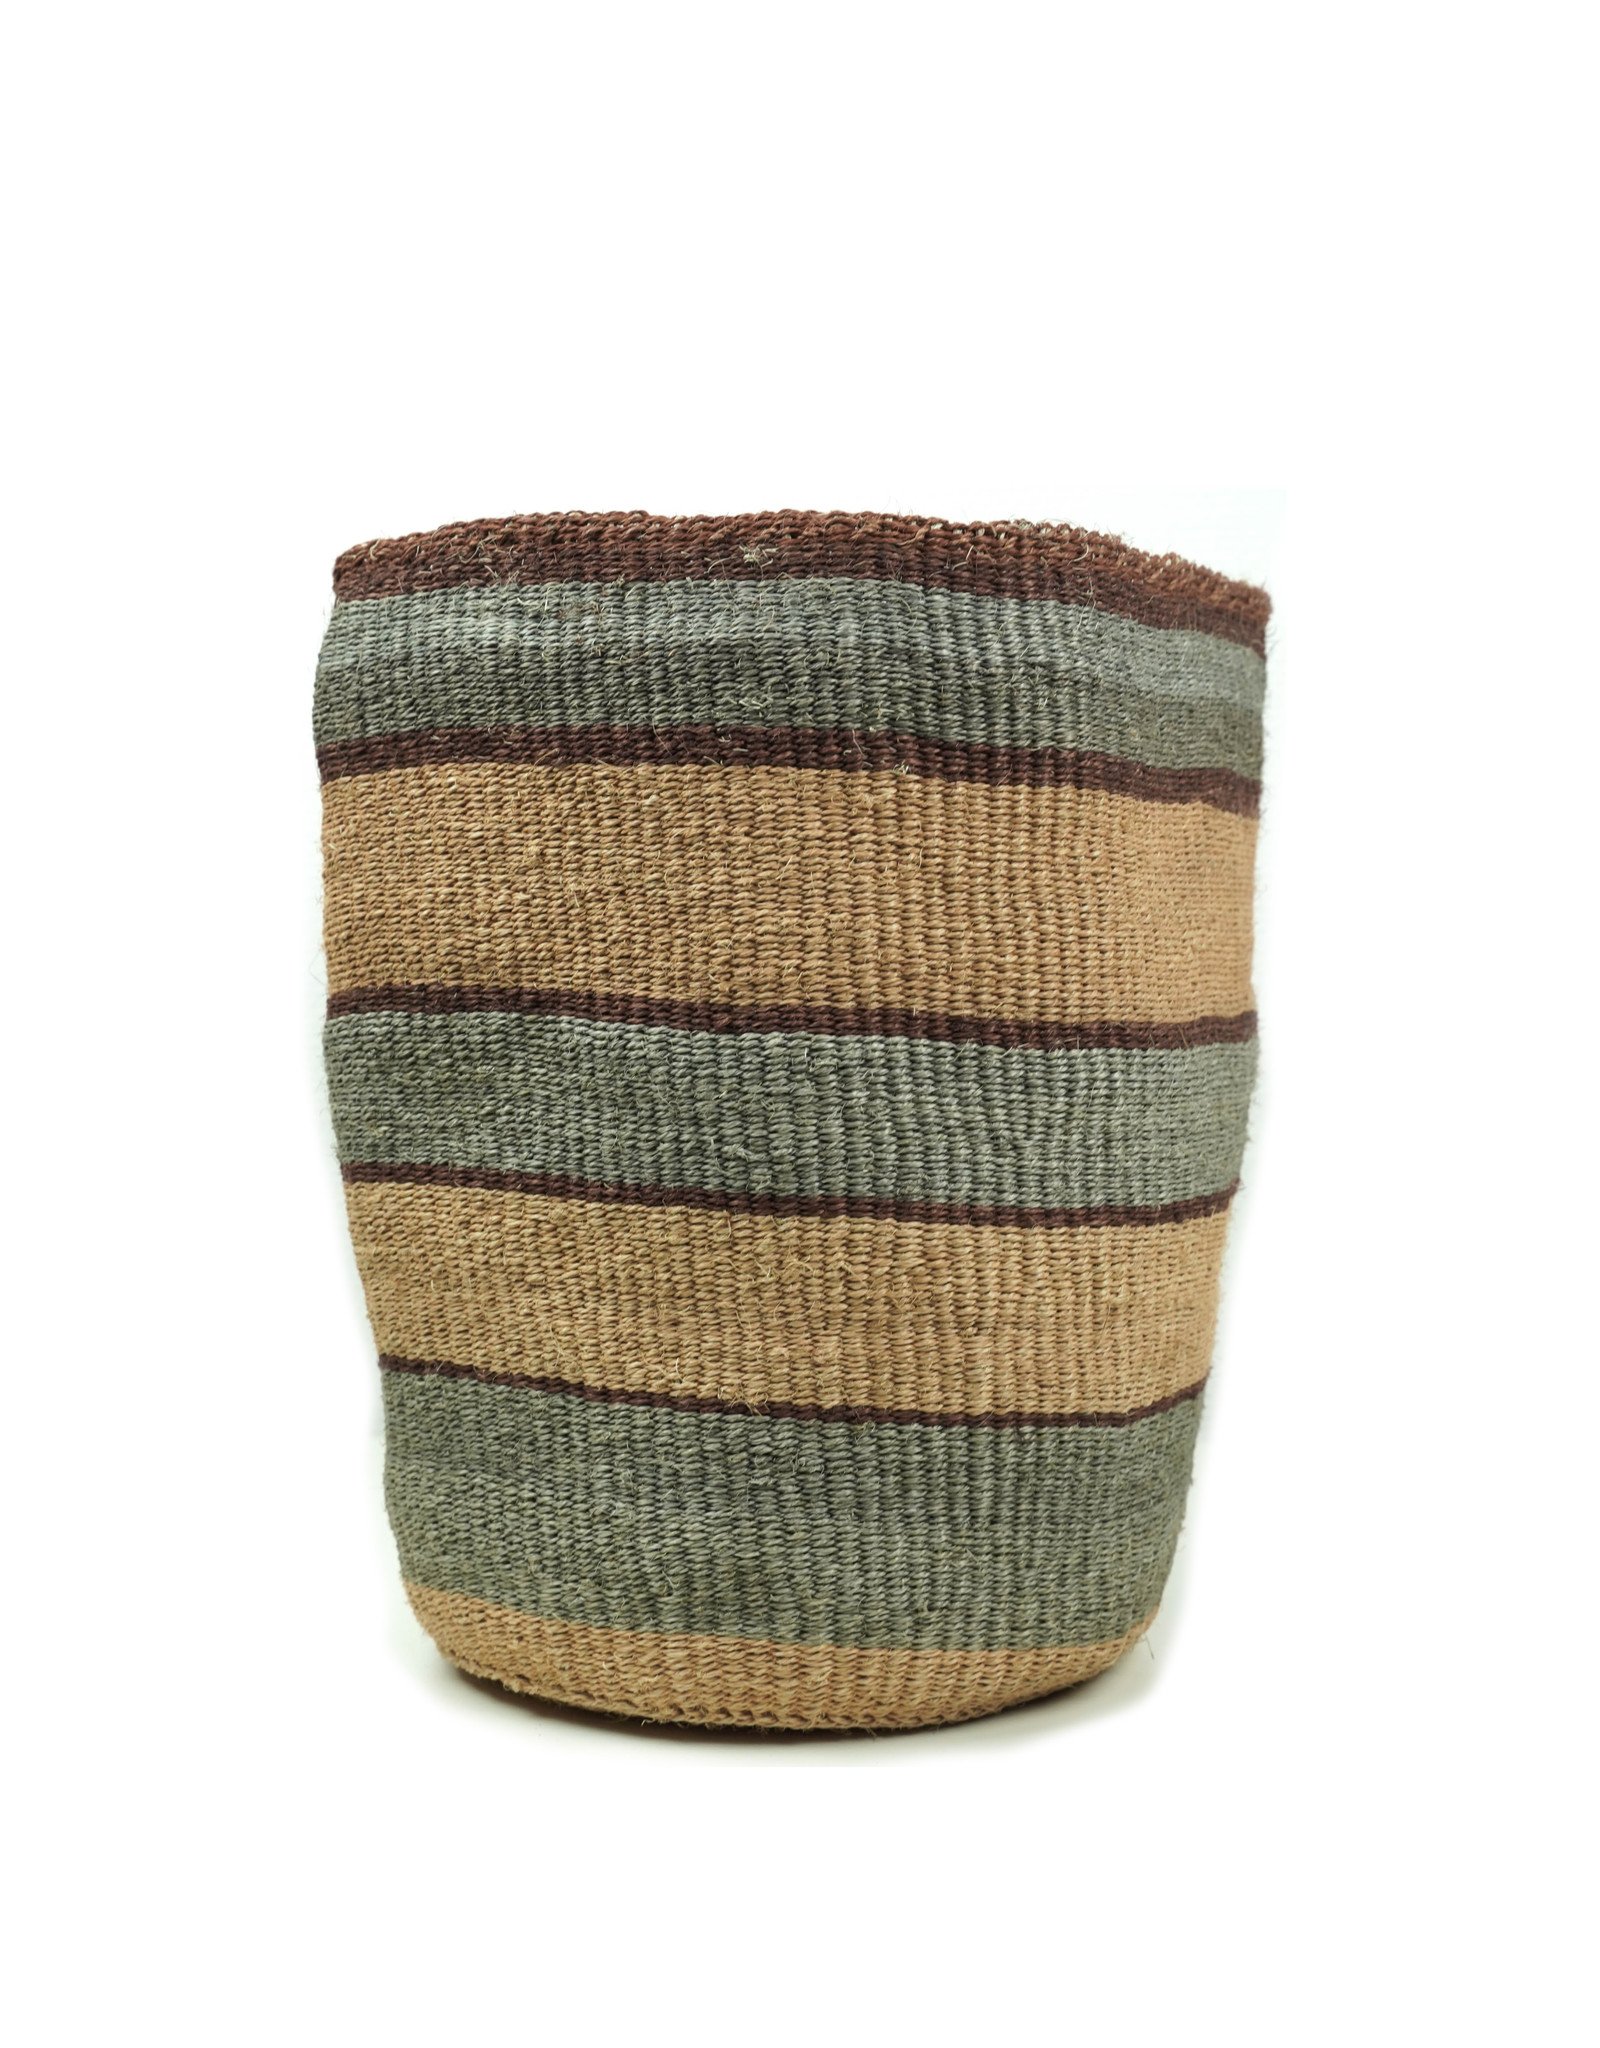 Maisha.Style Taita basket - reed grey brown stripes - L4